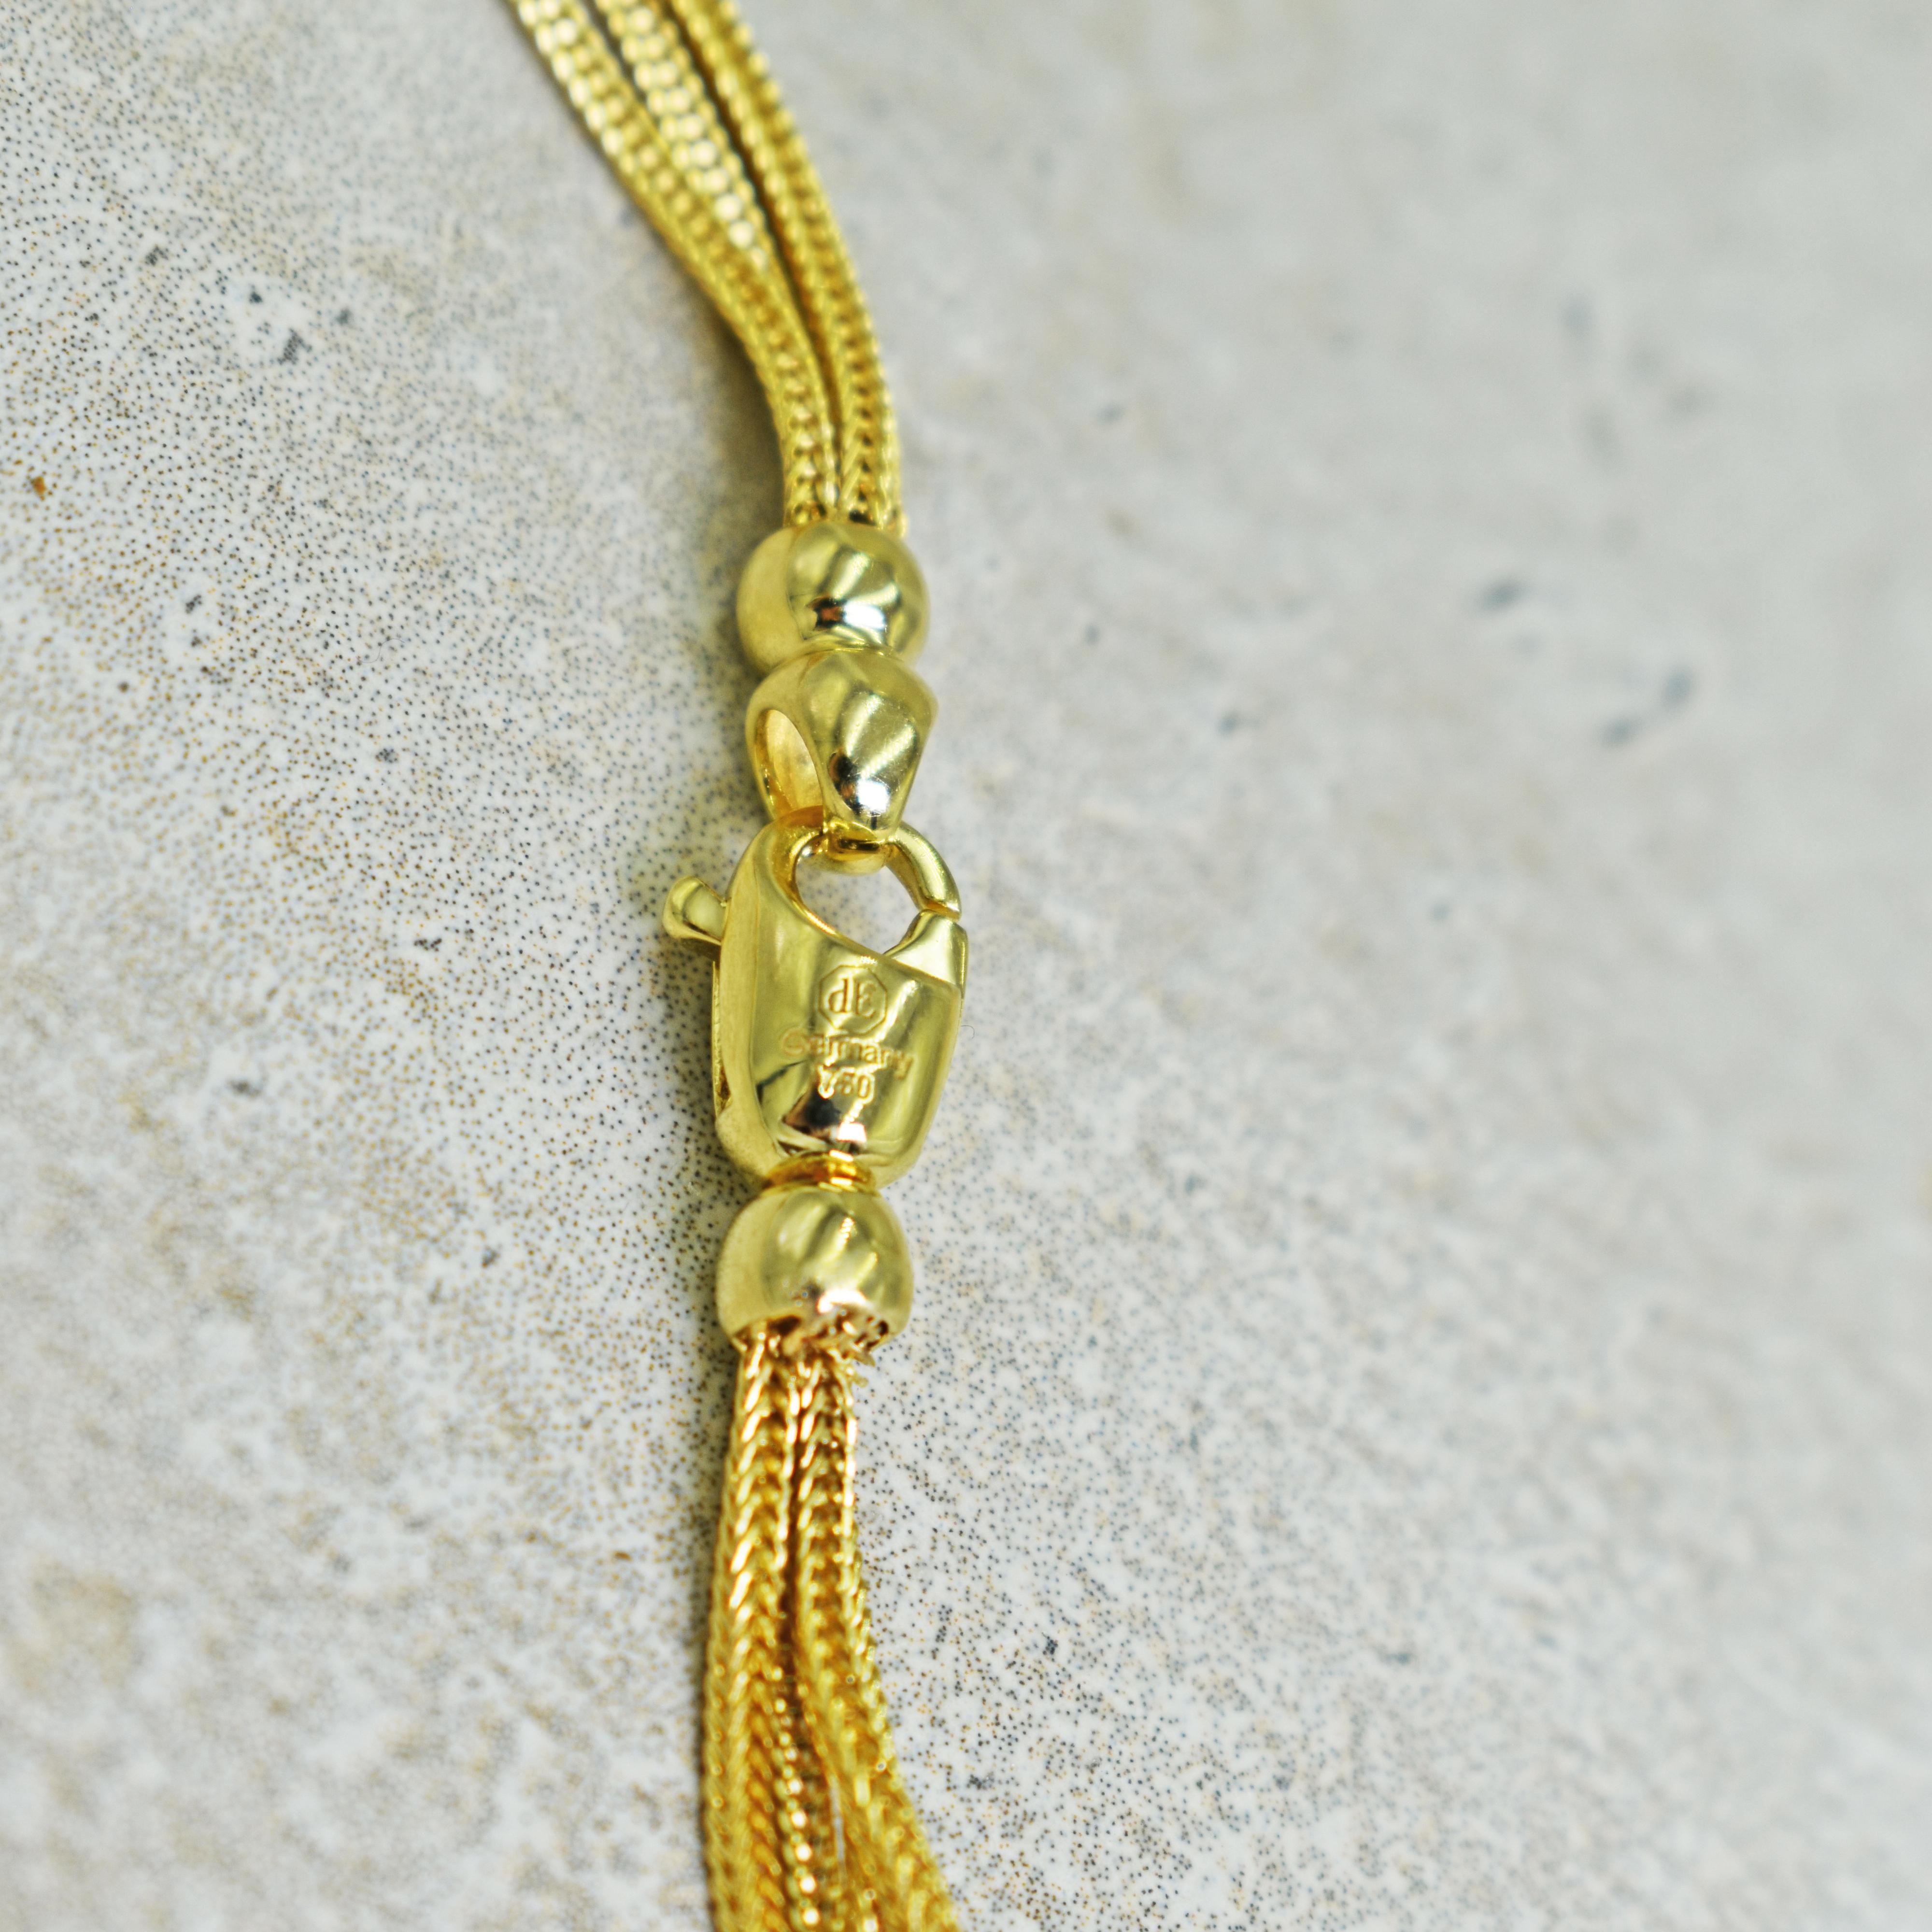 Contemporary Aquaprase 22 Karat Gold Pendant on Four-Strand Chain Necklace For Sale